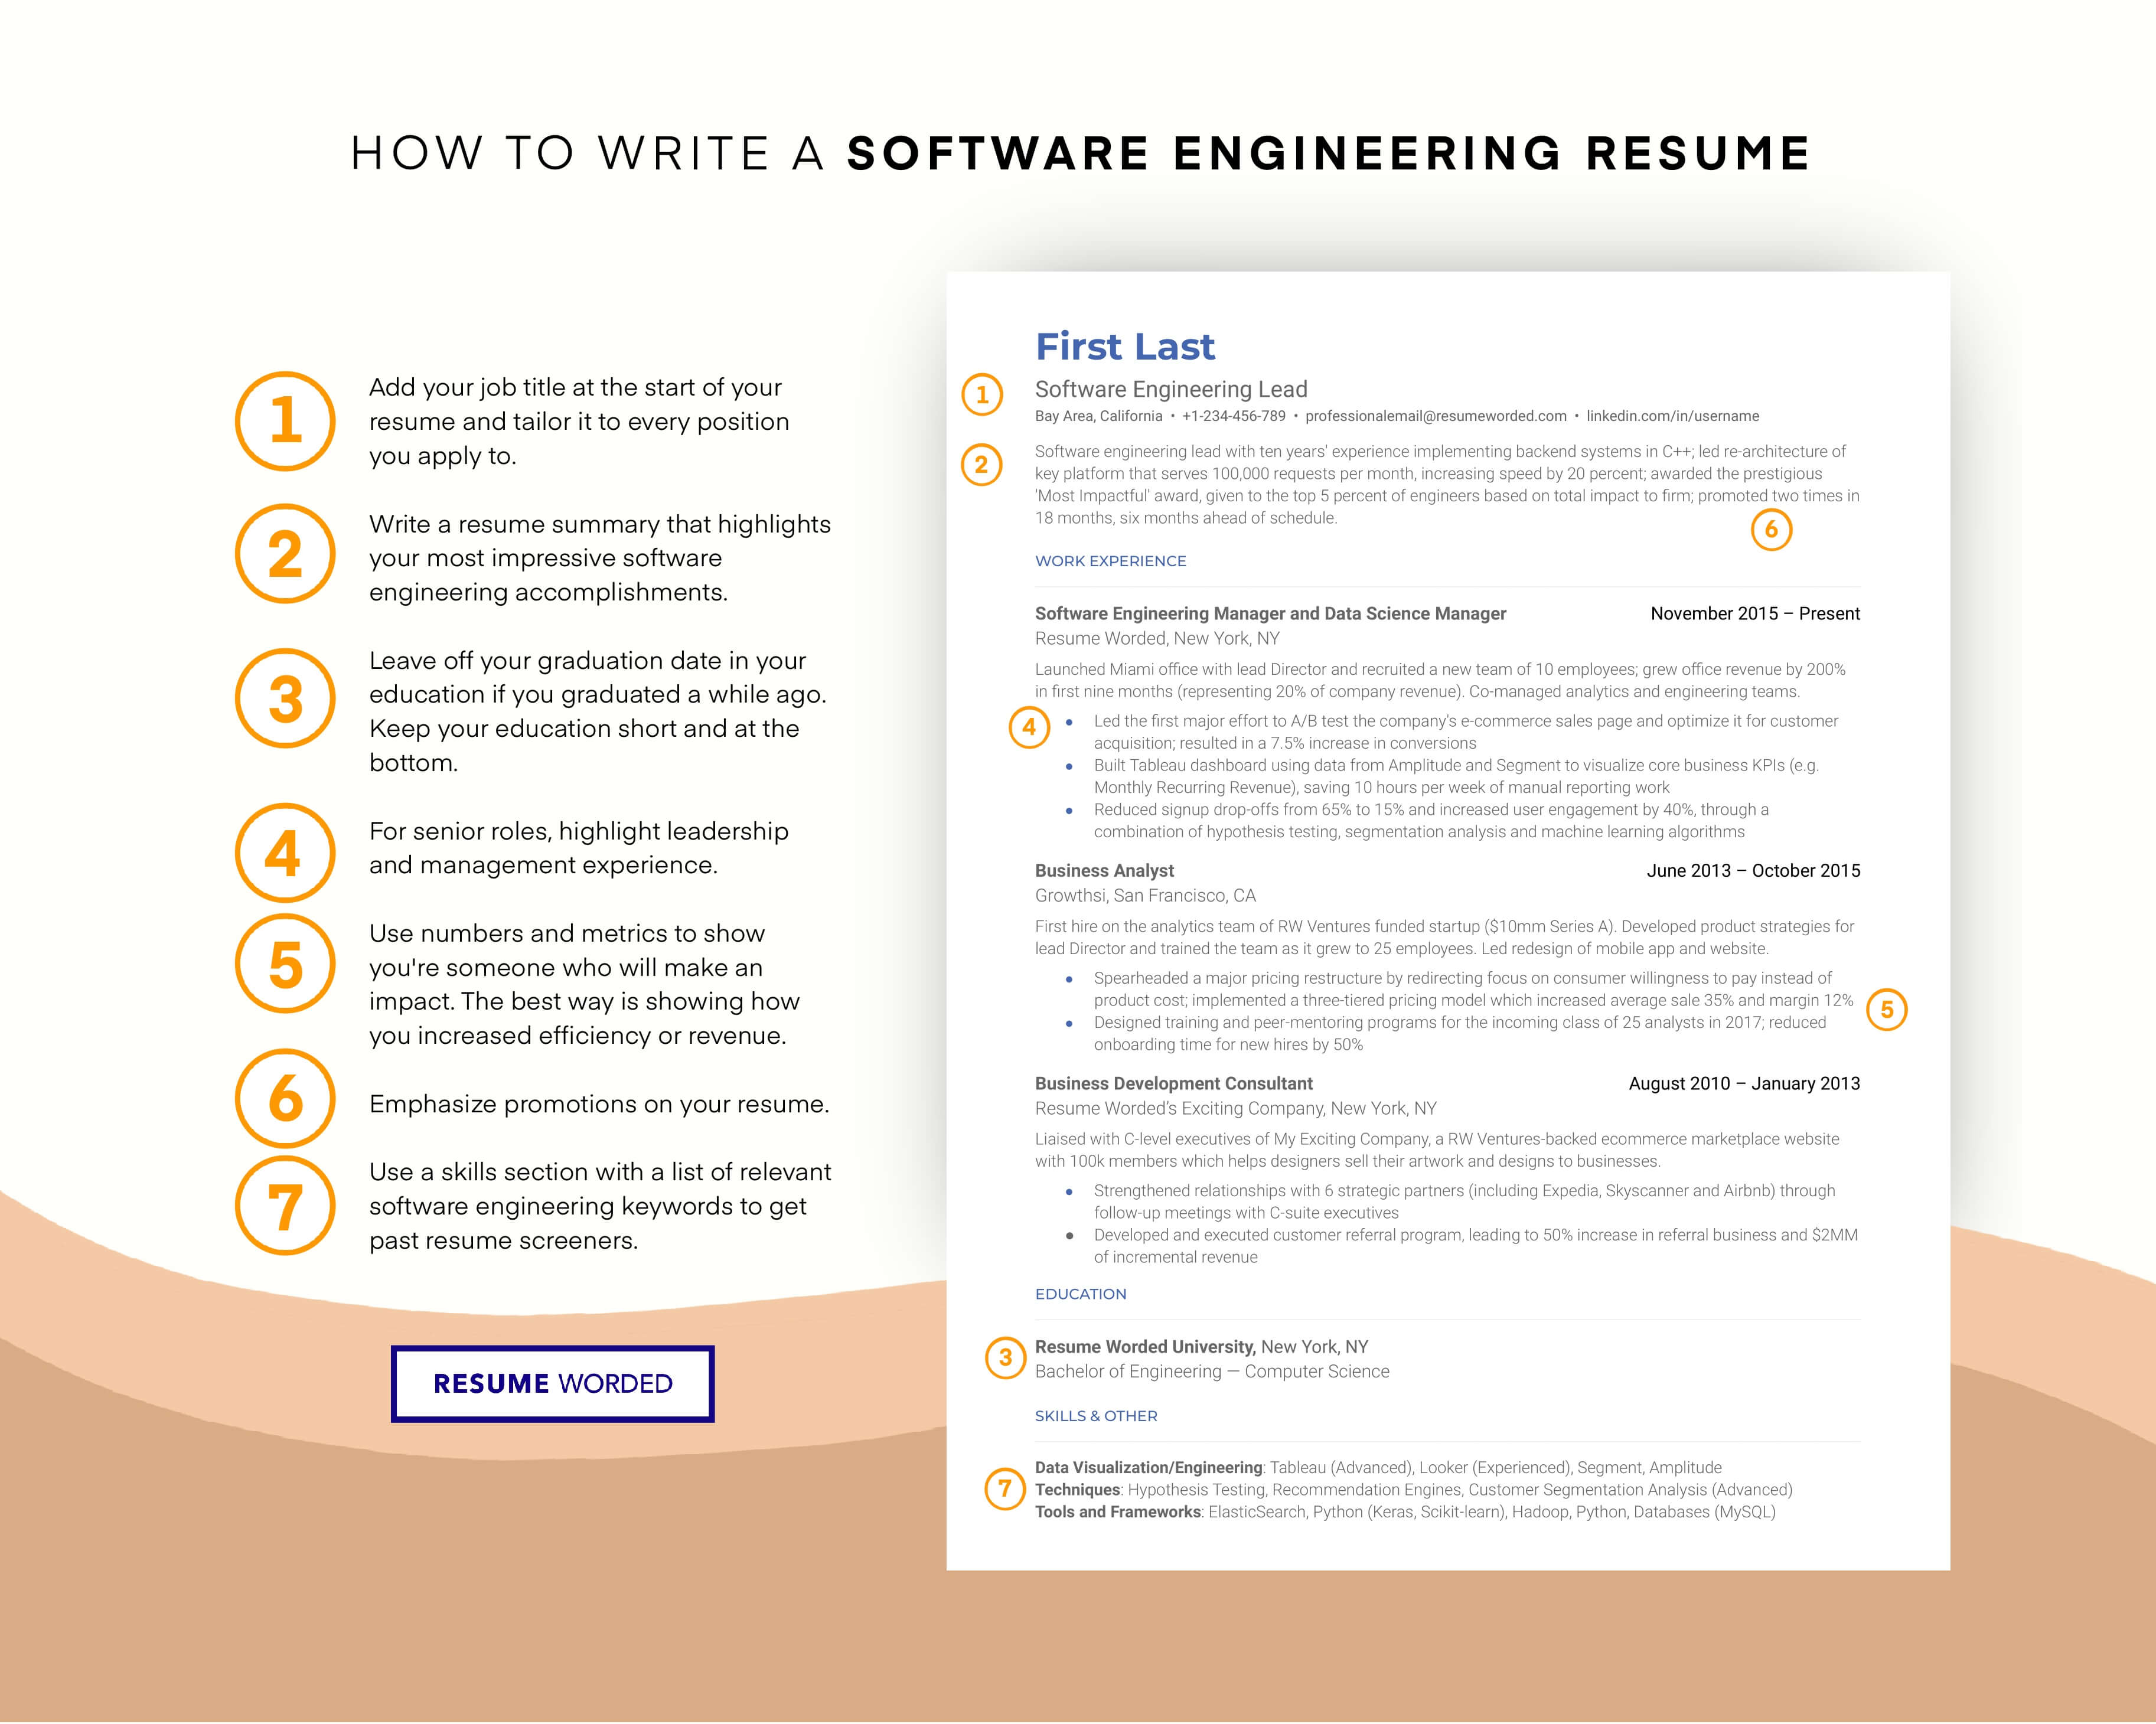 Show proficiency in modern programming languages - Software Developer CV